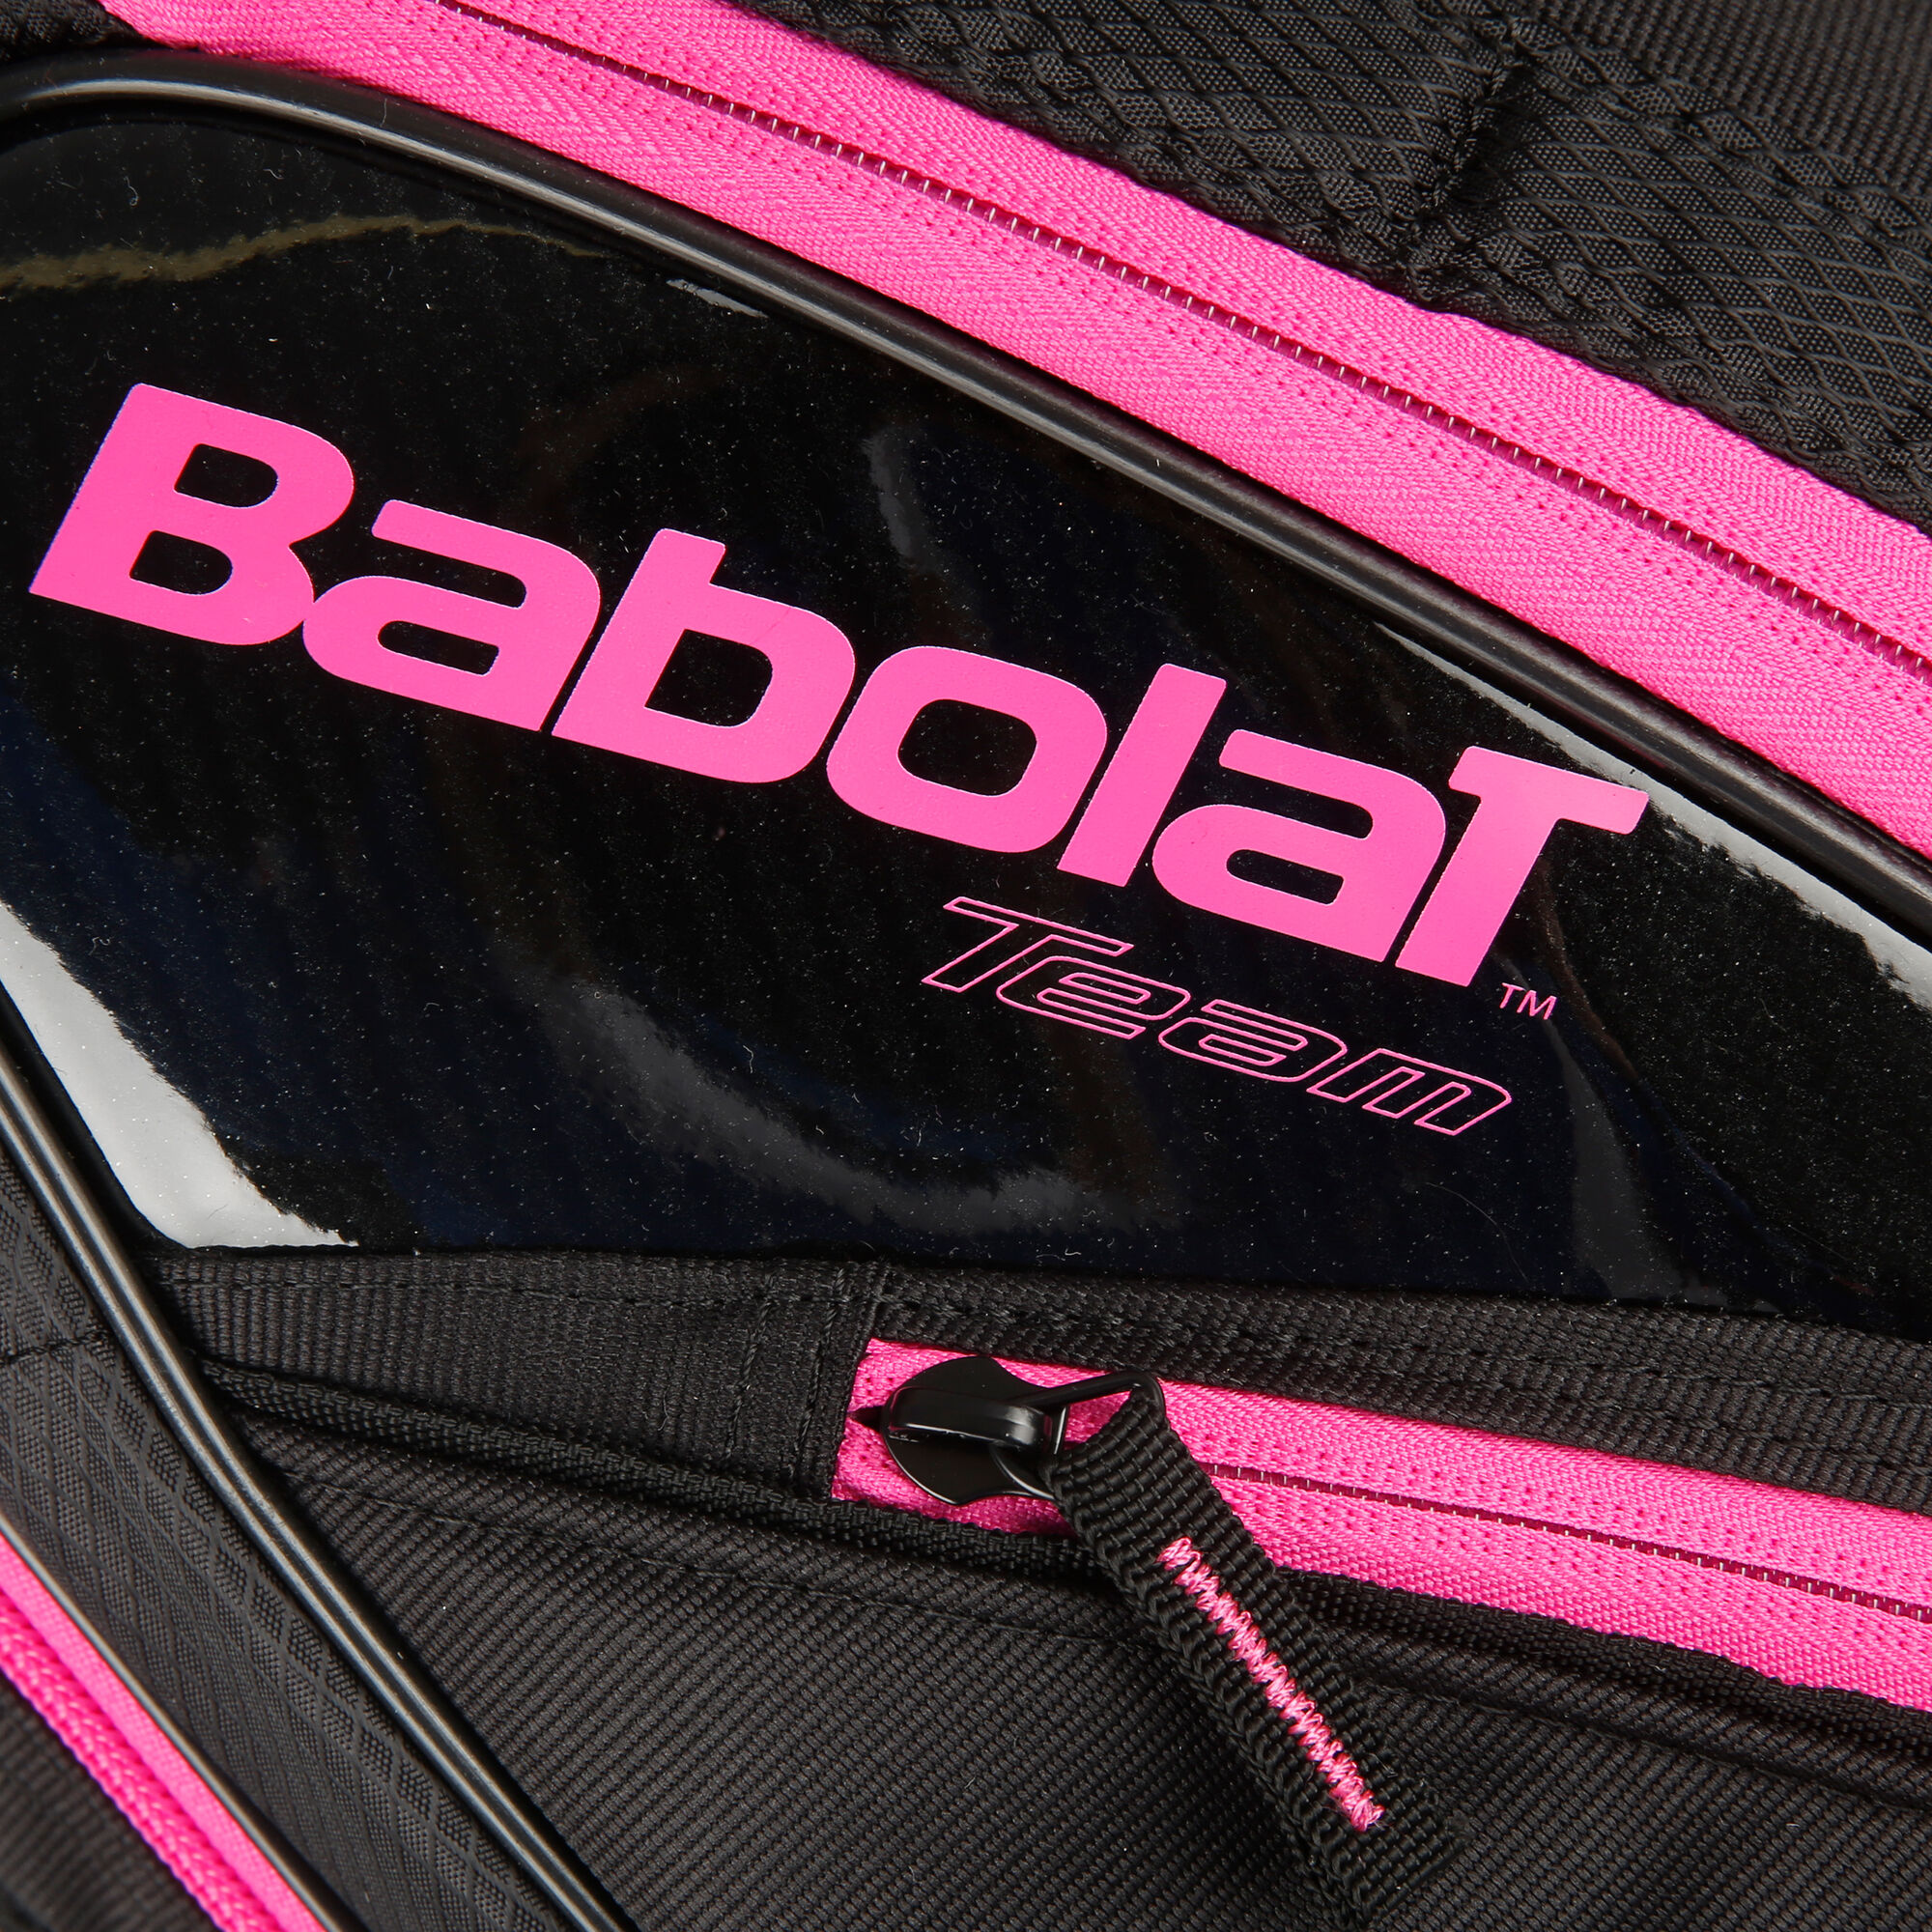 Babolat Team Backpack - Pink